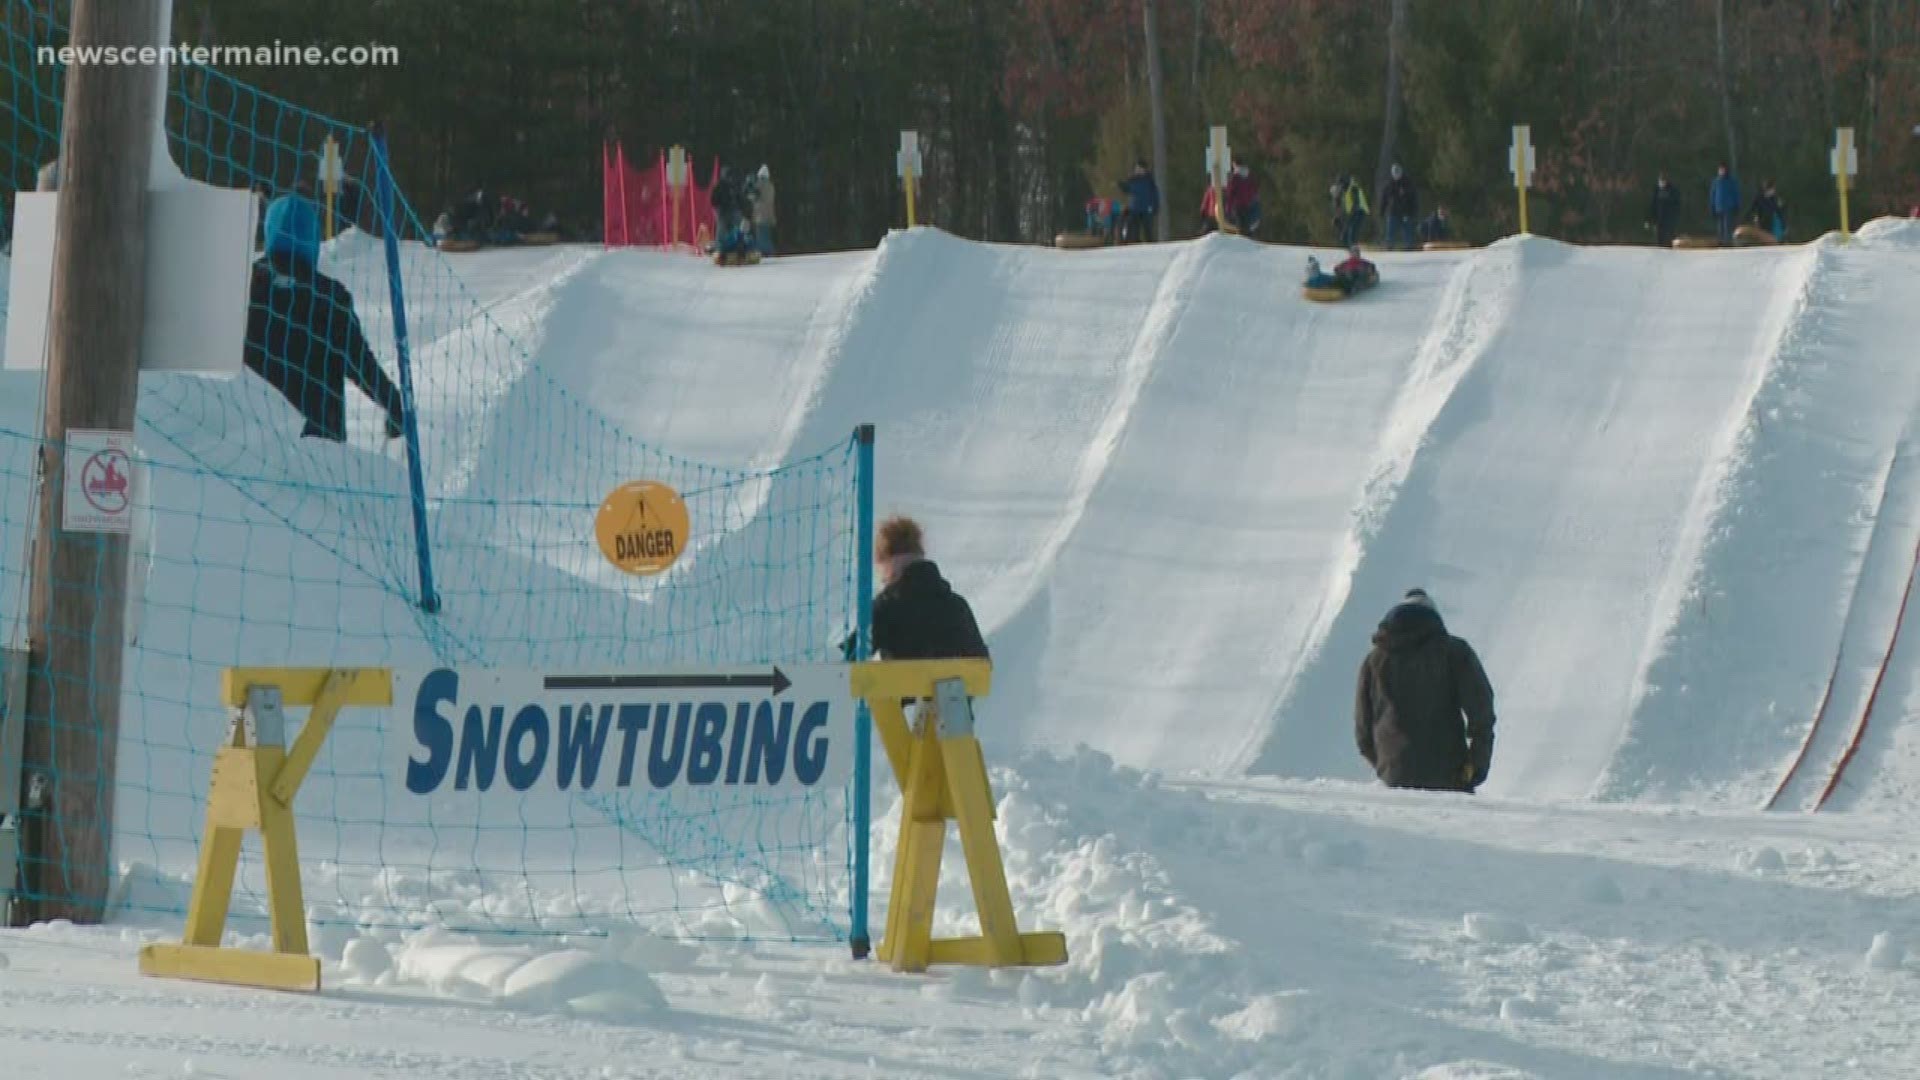 Hundreds enjoyed opening day at snowtubing park in Windham.